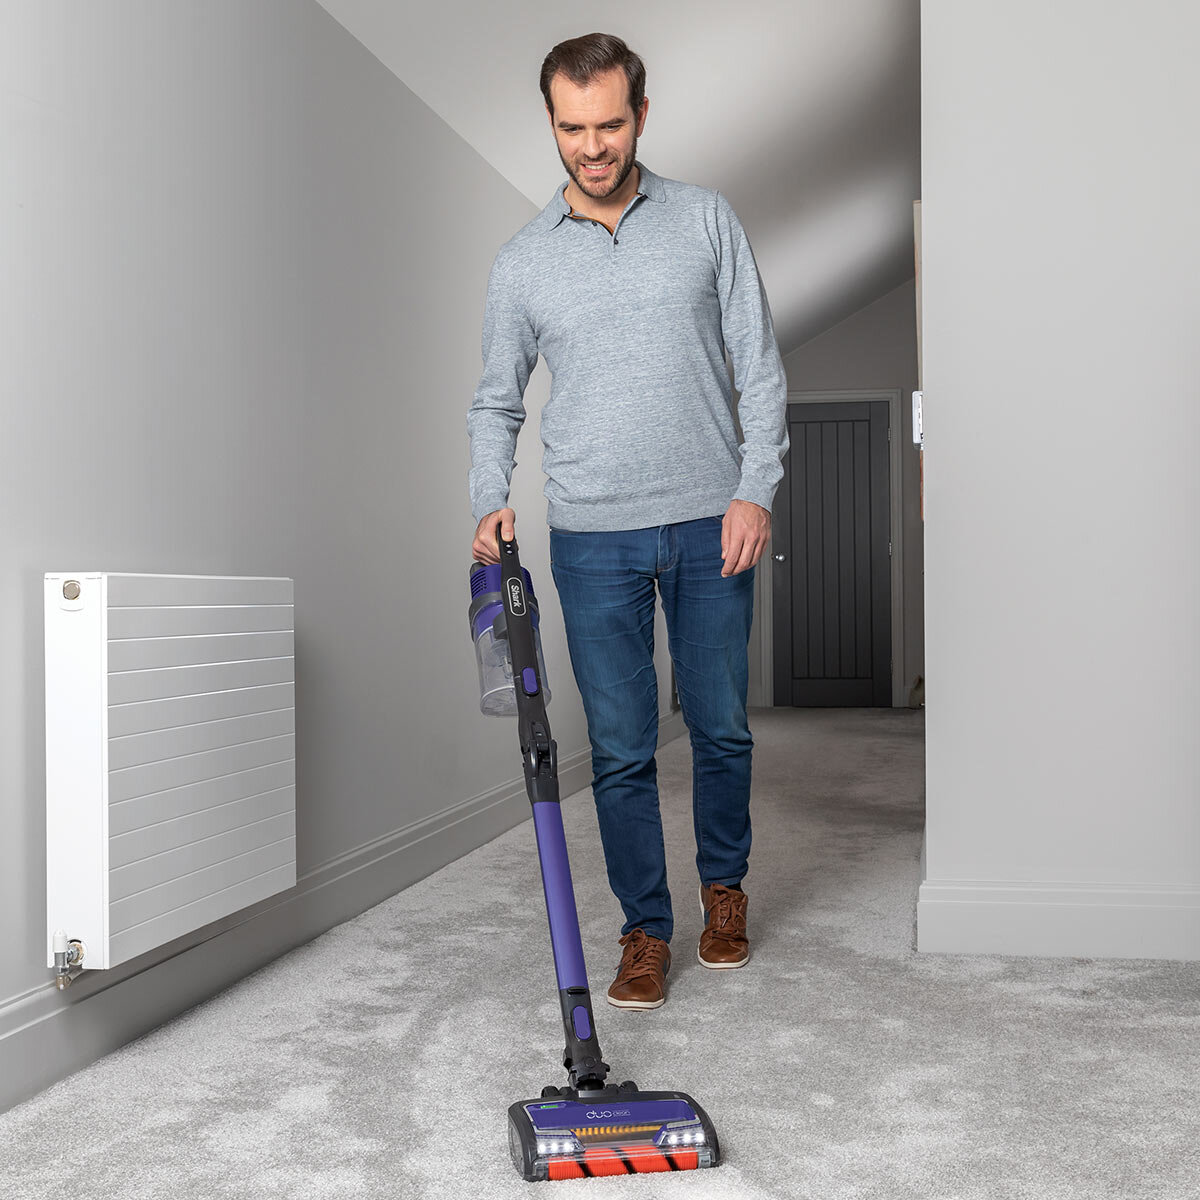 lifestyle image of man using vacuum on carpet